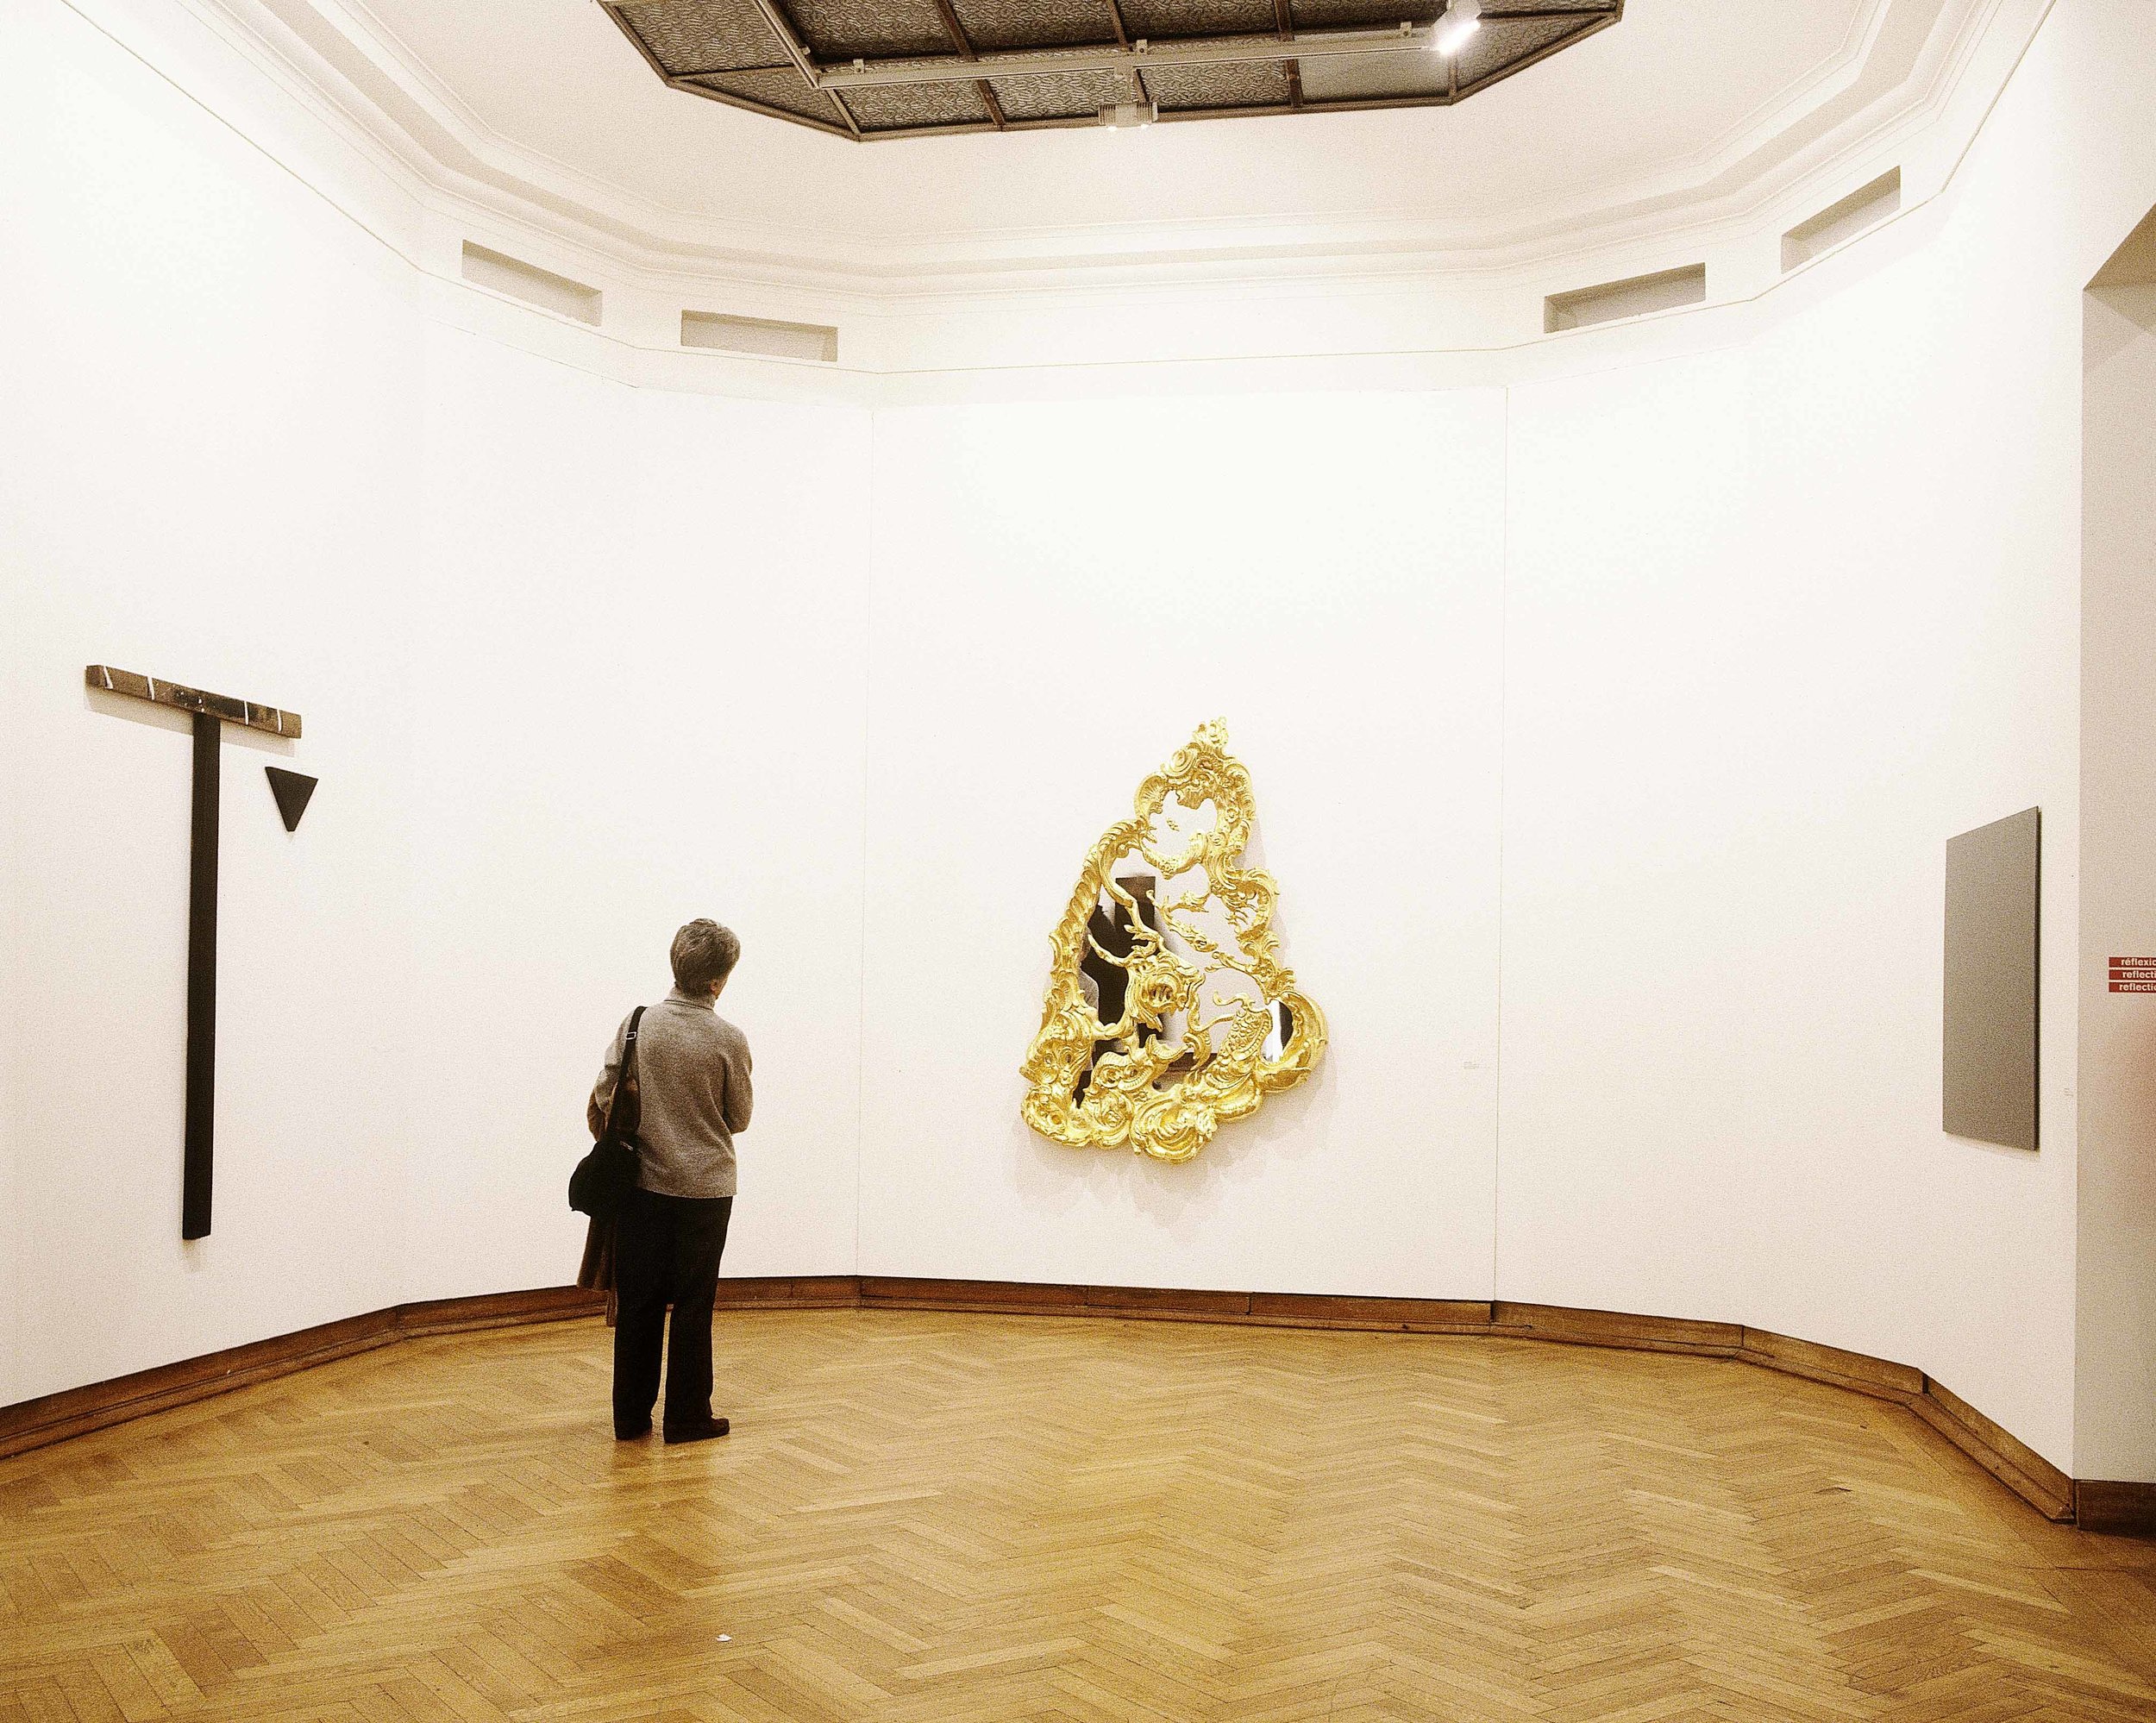   Vous voici, Reflections : Works by Palermo, Koons, Richter. Photo Philippe De Gobert. 